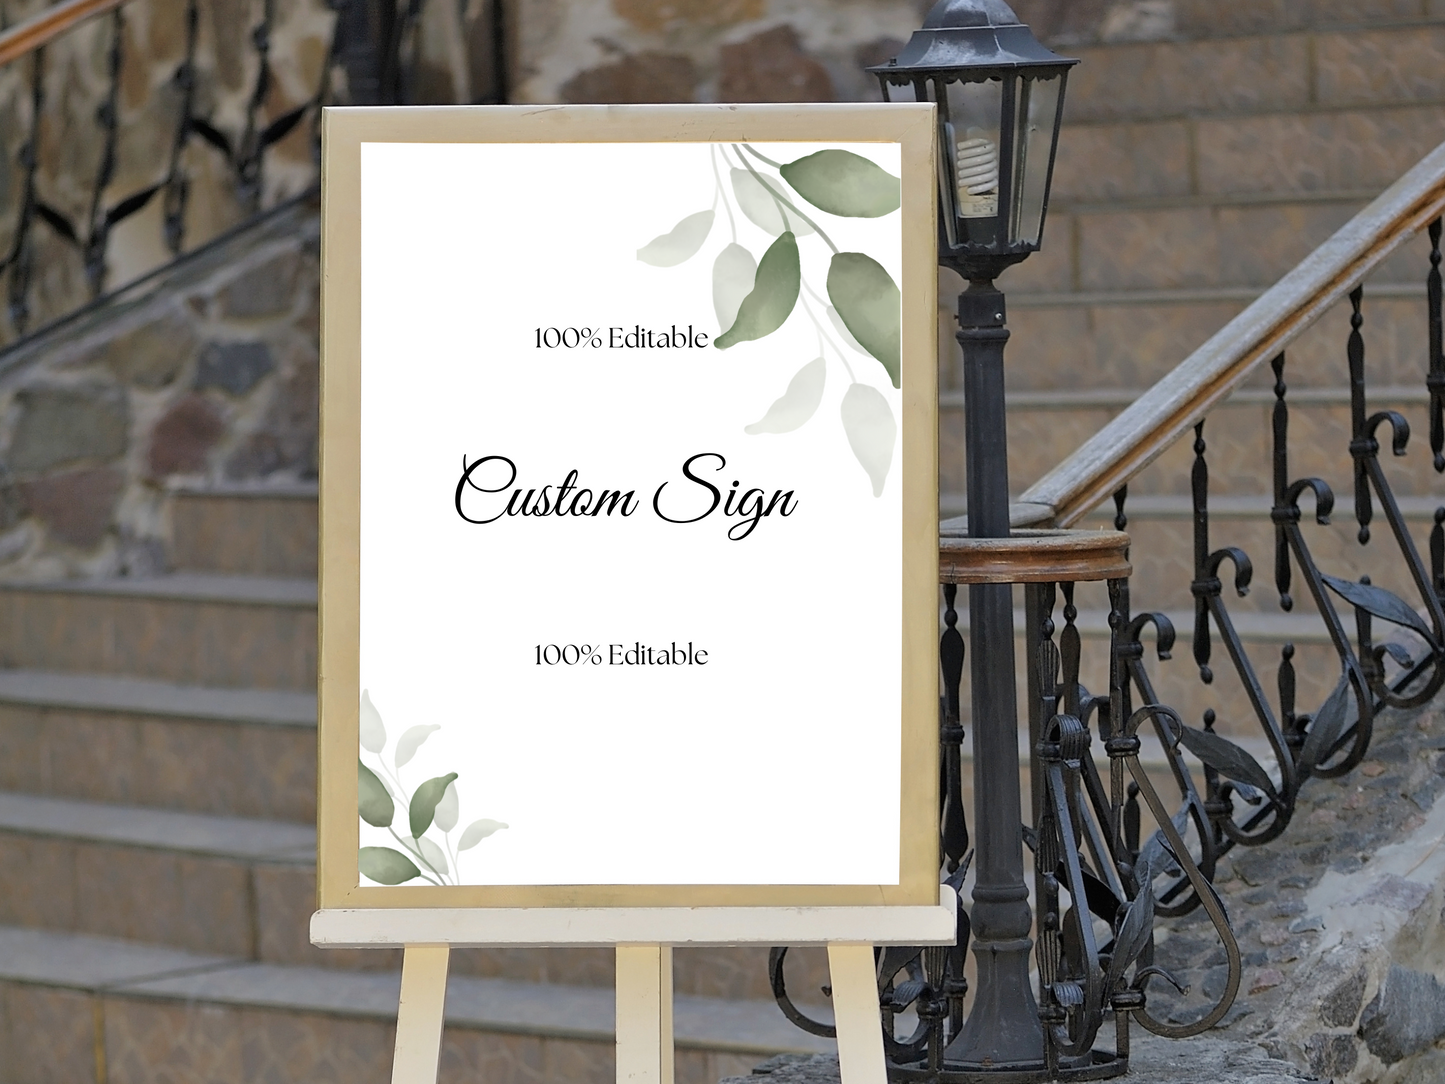 Watercolor Greenery Leaves Wedding Sign Template Bundle, Printable Templates